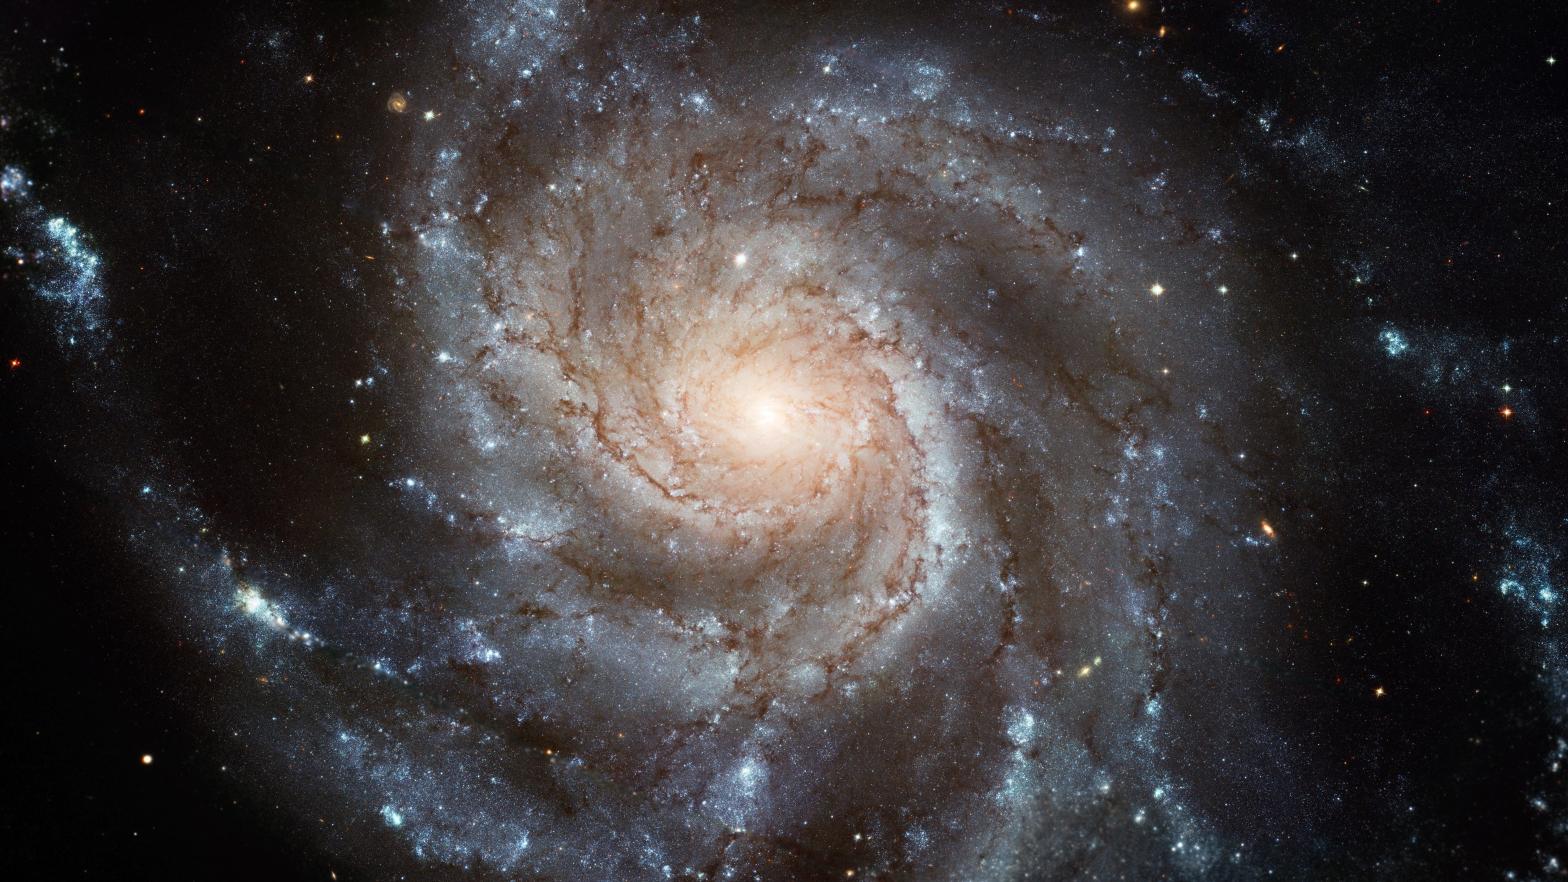 The spiraling arms of the Pinwheel galaxy. (Image: NASA, ESA, K. Kuntz (JHU), F. Bresolin (University of Hawaii), J. Trauger (Jet Propulsion Lab), J. Mould (NOAO), Y.-H. Chu (University of Illinois, Urbana) and STScI; CFHT Image: Canada-France-Hawaii Telescope/J.-C. Cuillandre/Coelum; NOAO Image: G. Jacoby, B. Bohannan, M. Hanna/NOAO/AURA/NSF)